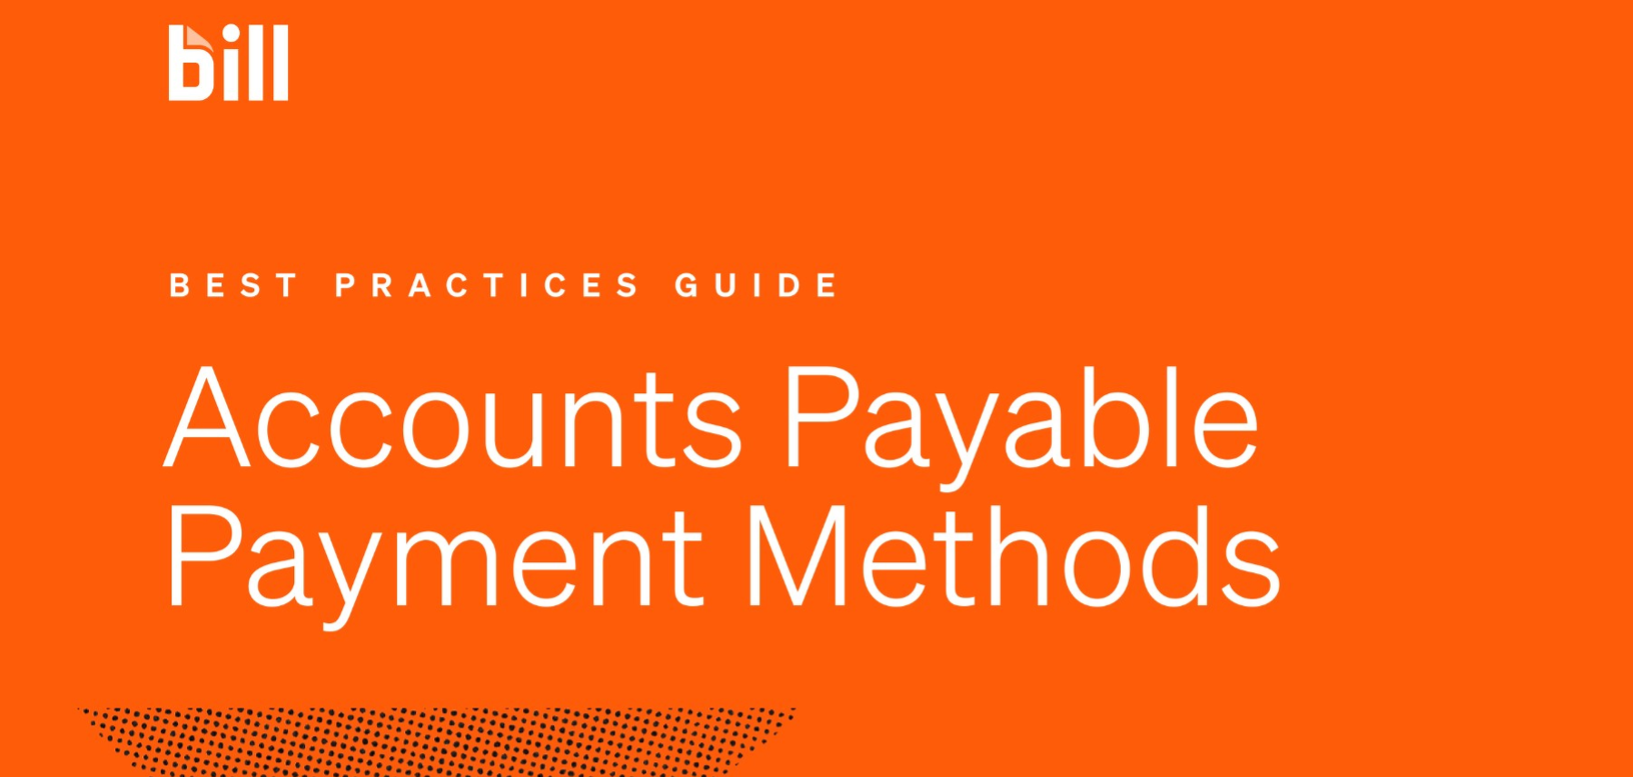 AP Payment Methods - Best Practices Guide